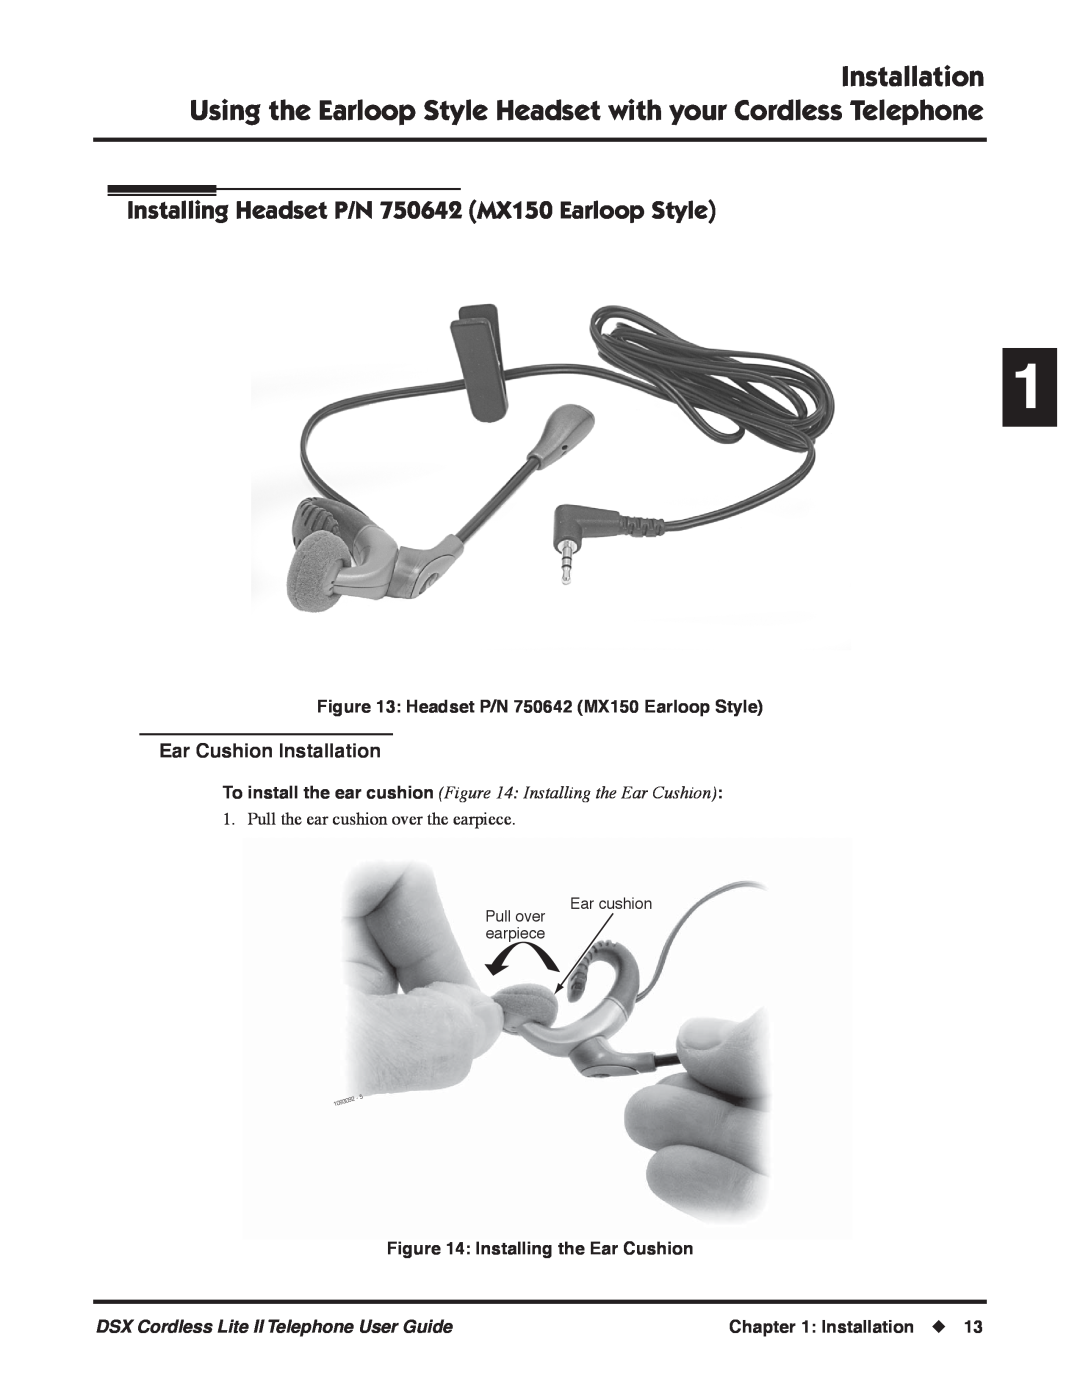 NEC N 1093092 manual Installing Headset P/N 750642 MX150 Earloop Style, Installing the Ear Cushion, Installation 